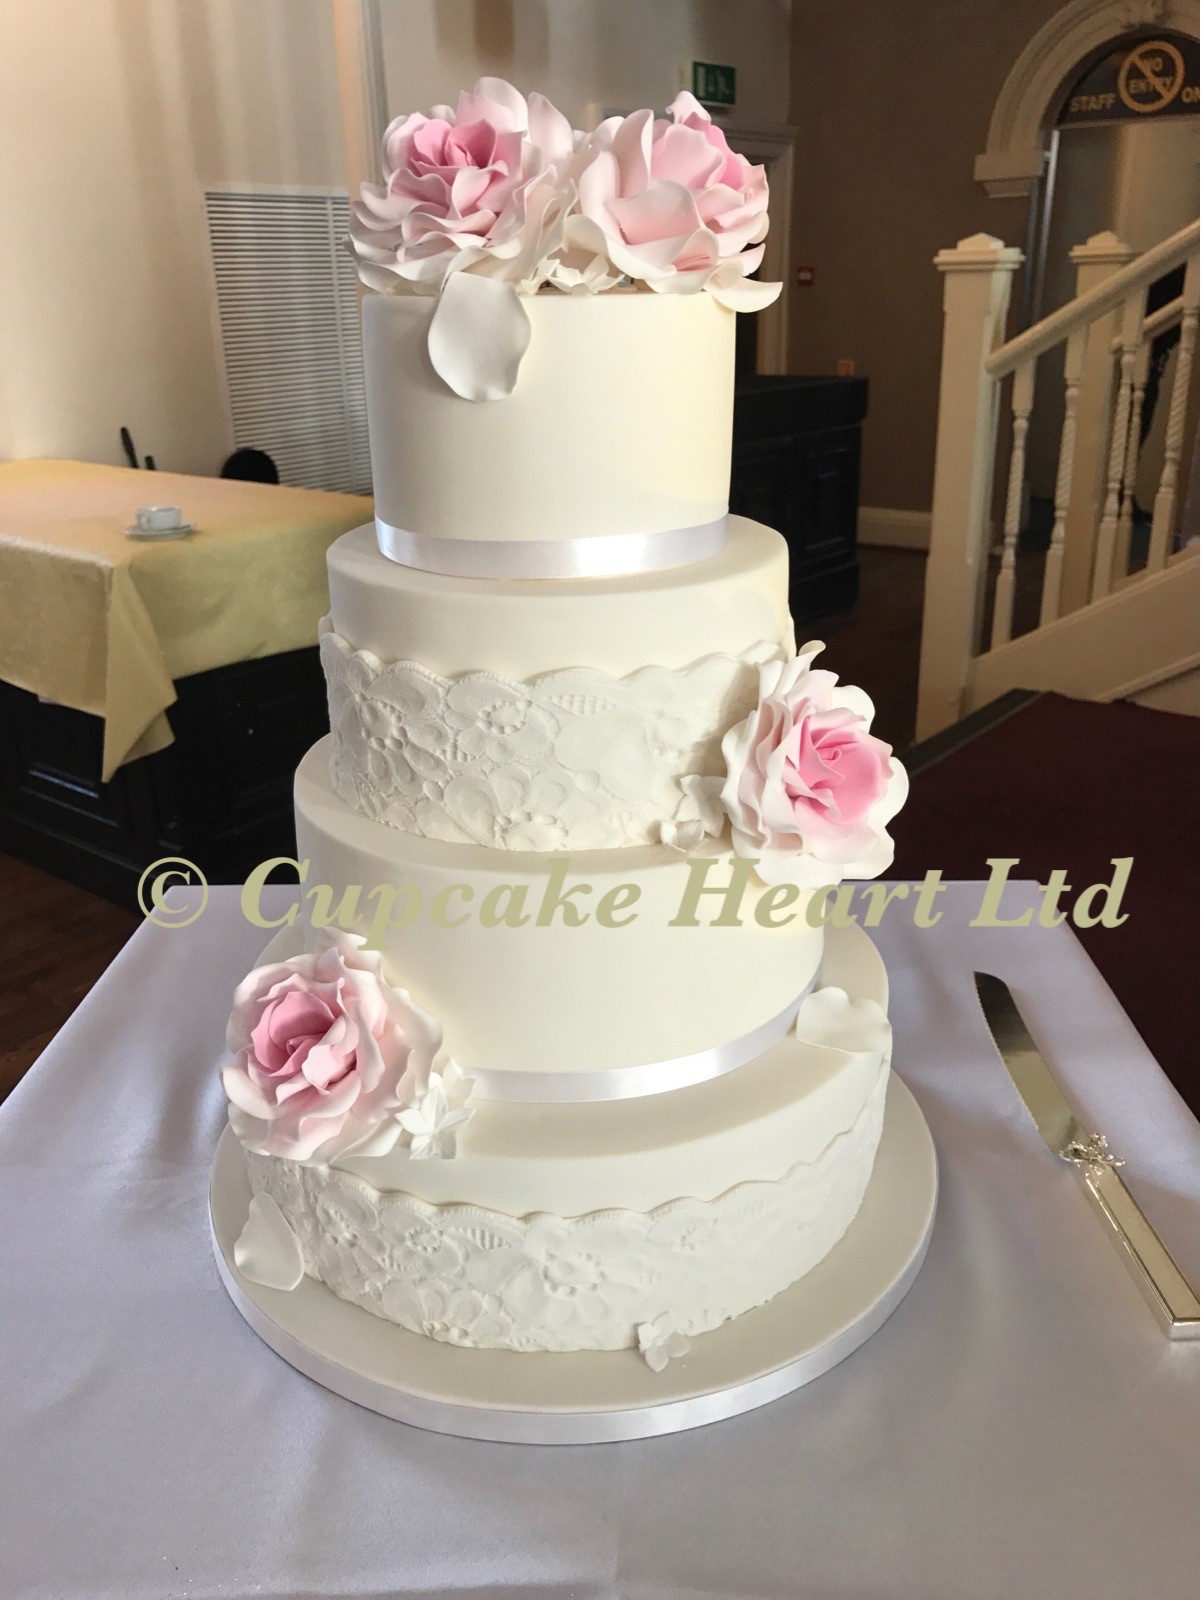 Trad wedding cake.jpg